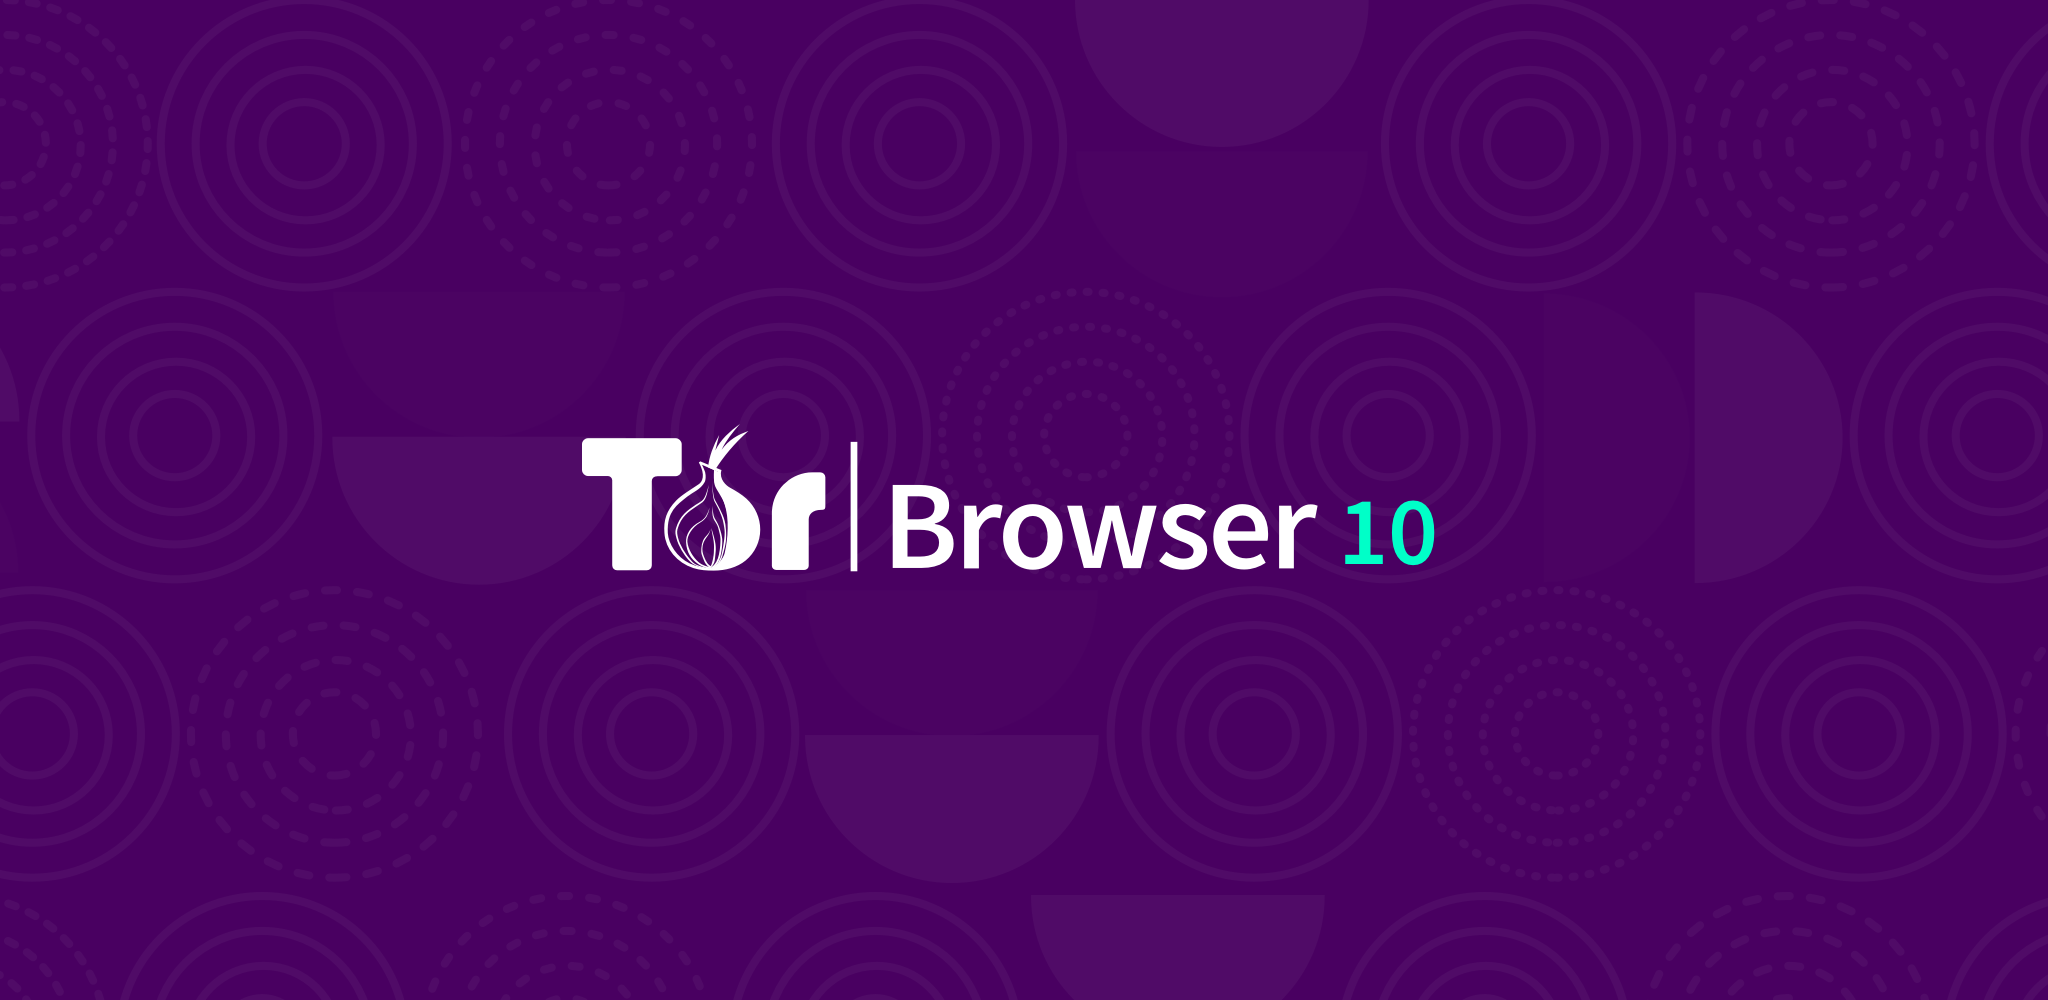 Tor browser 5 mega вход скачать тор браузер лук mega2web